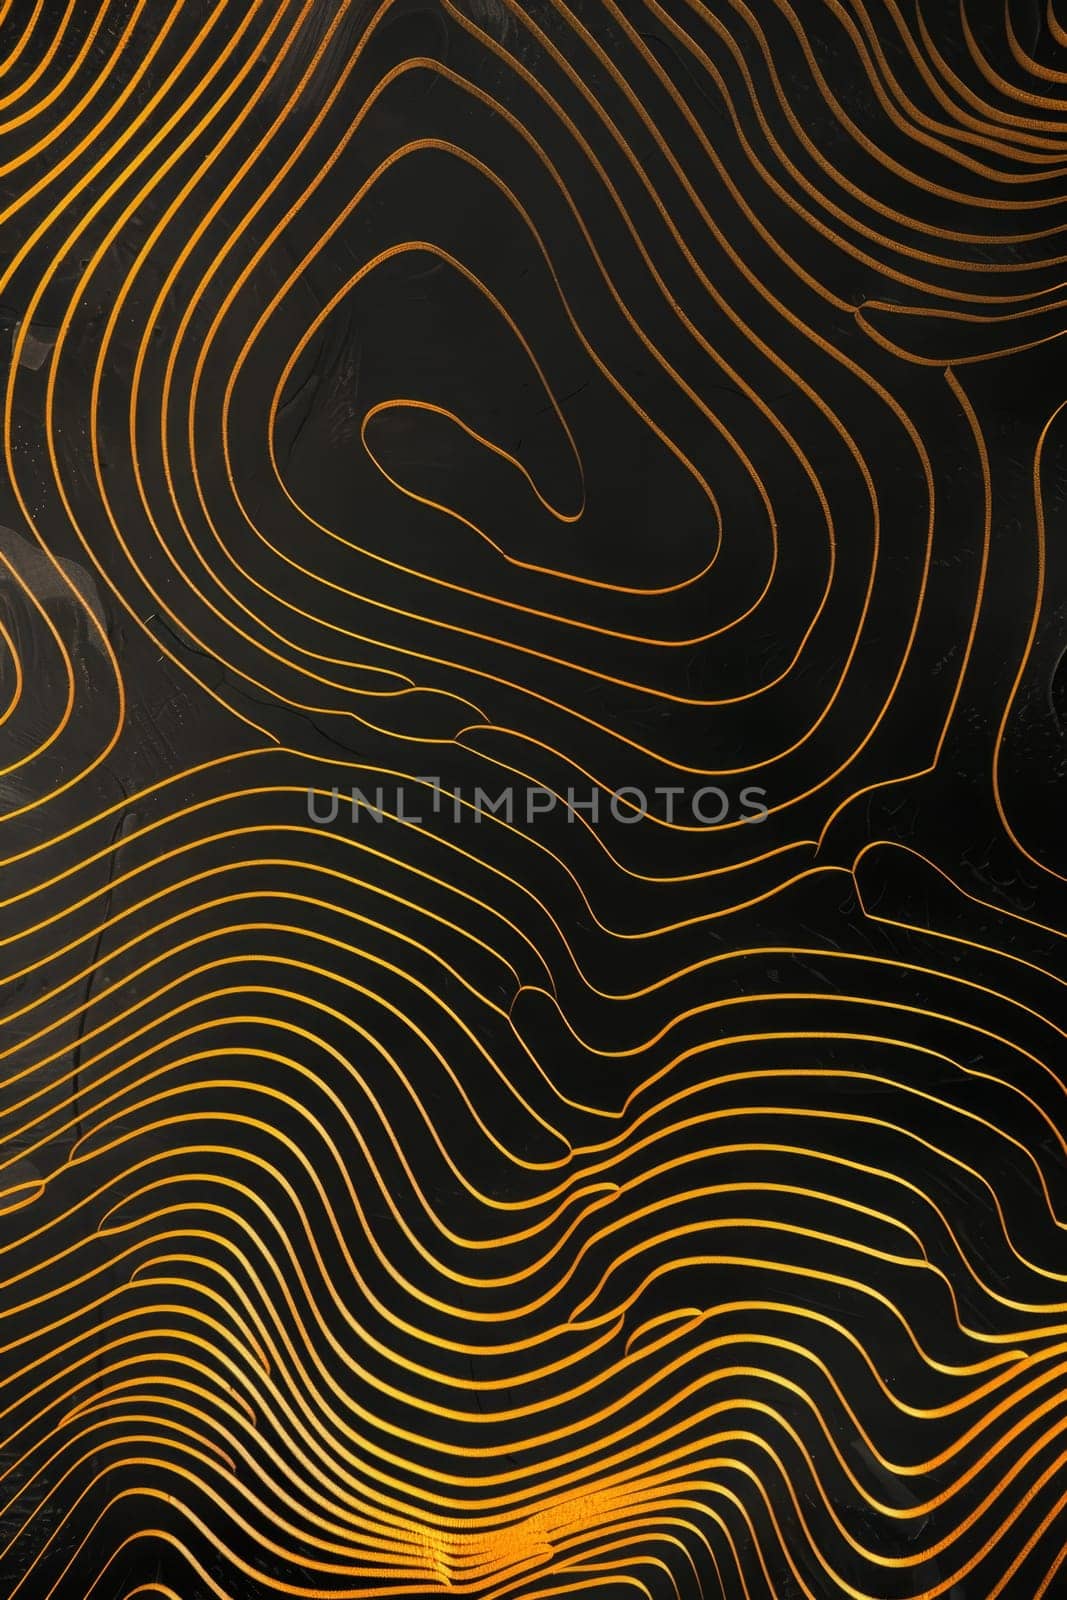 A golden abstract fingerprint on a black background. Illustration.